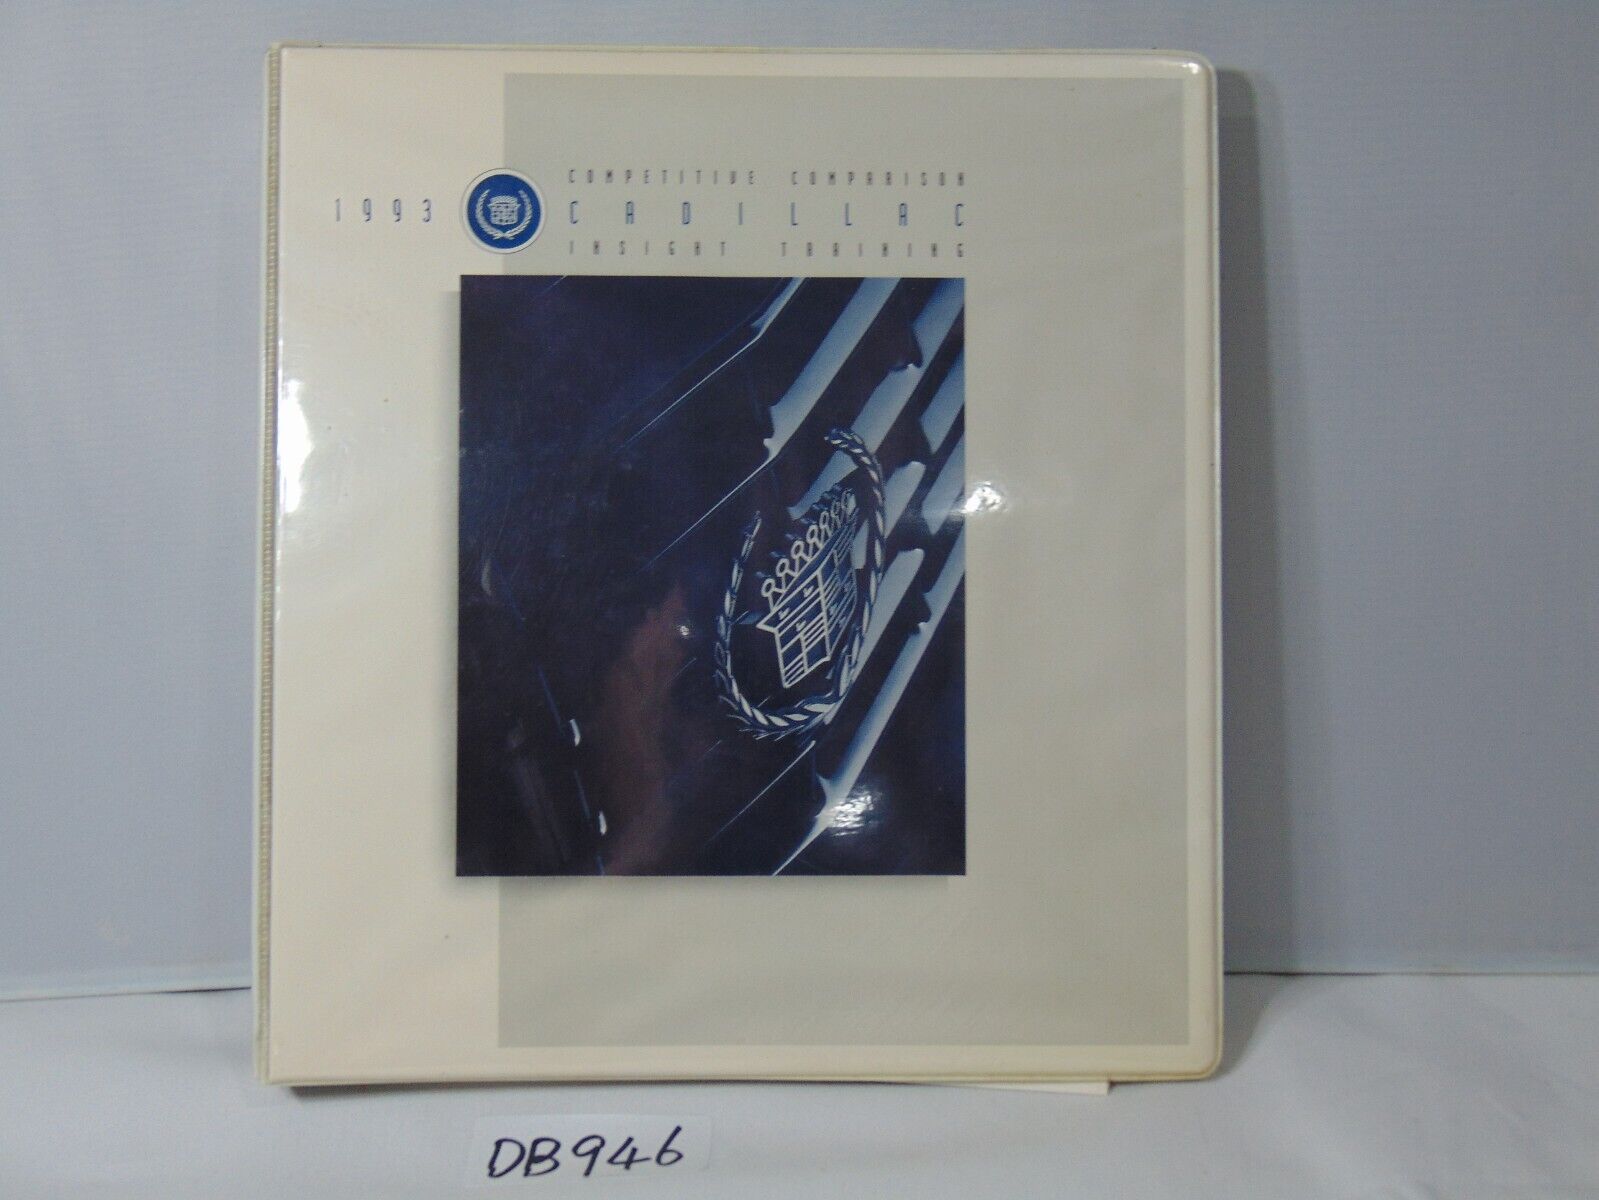 1993 CADILLAC NEW PRODUCT PRESENTATION PORTFOLIO DATA BOOK INSIGHT TRAINING